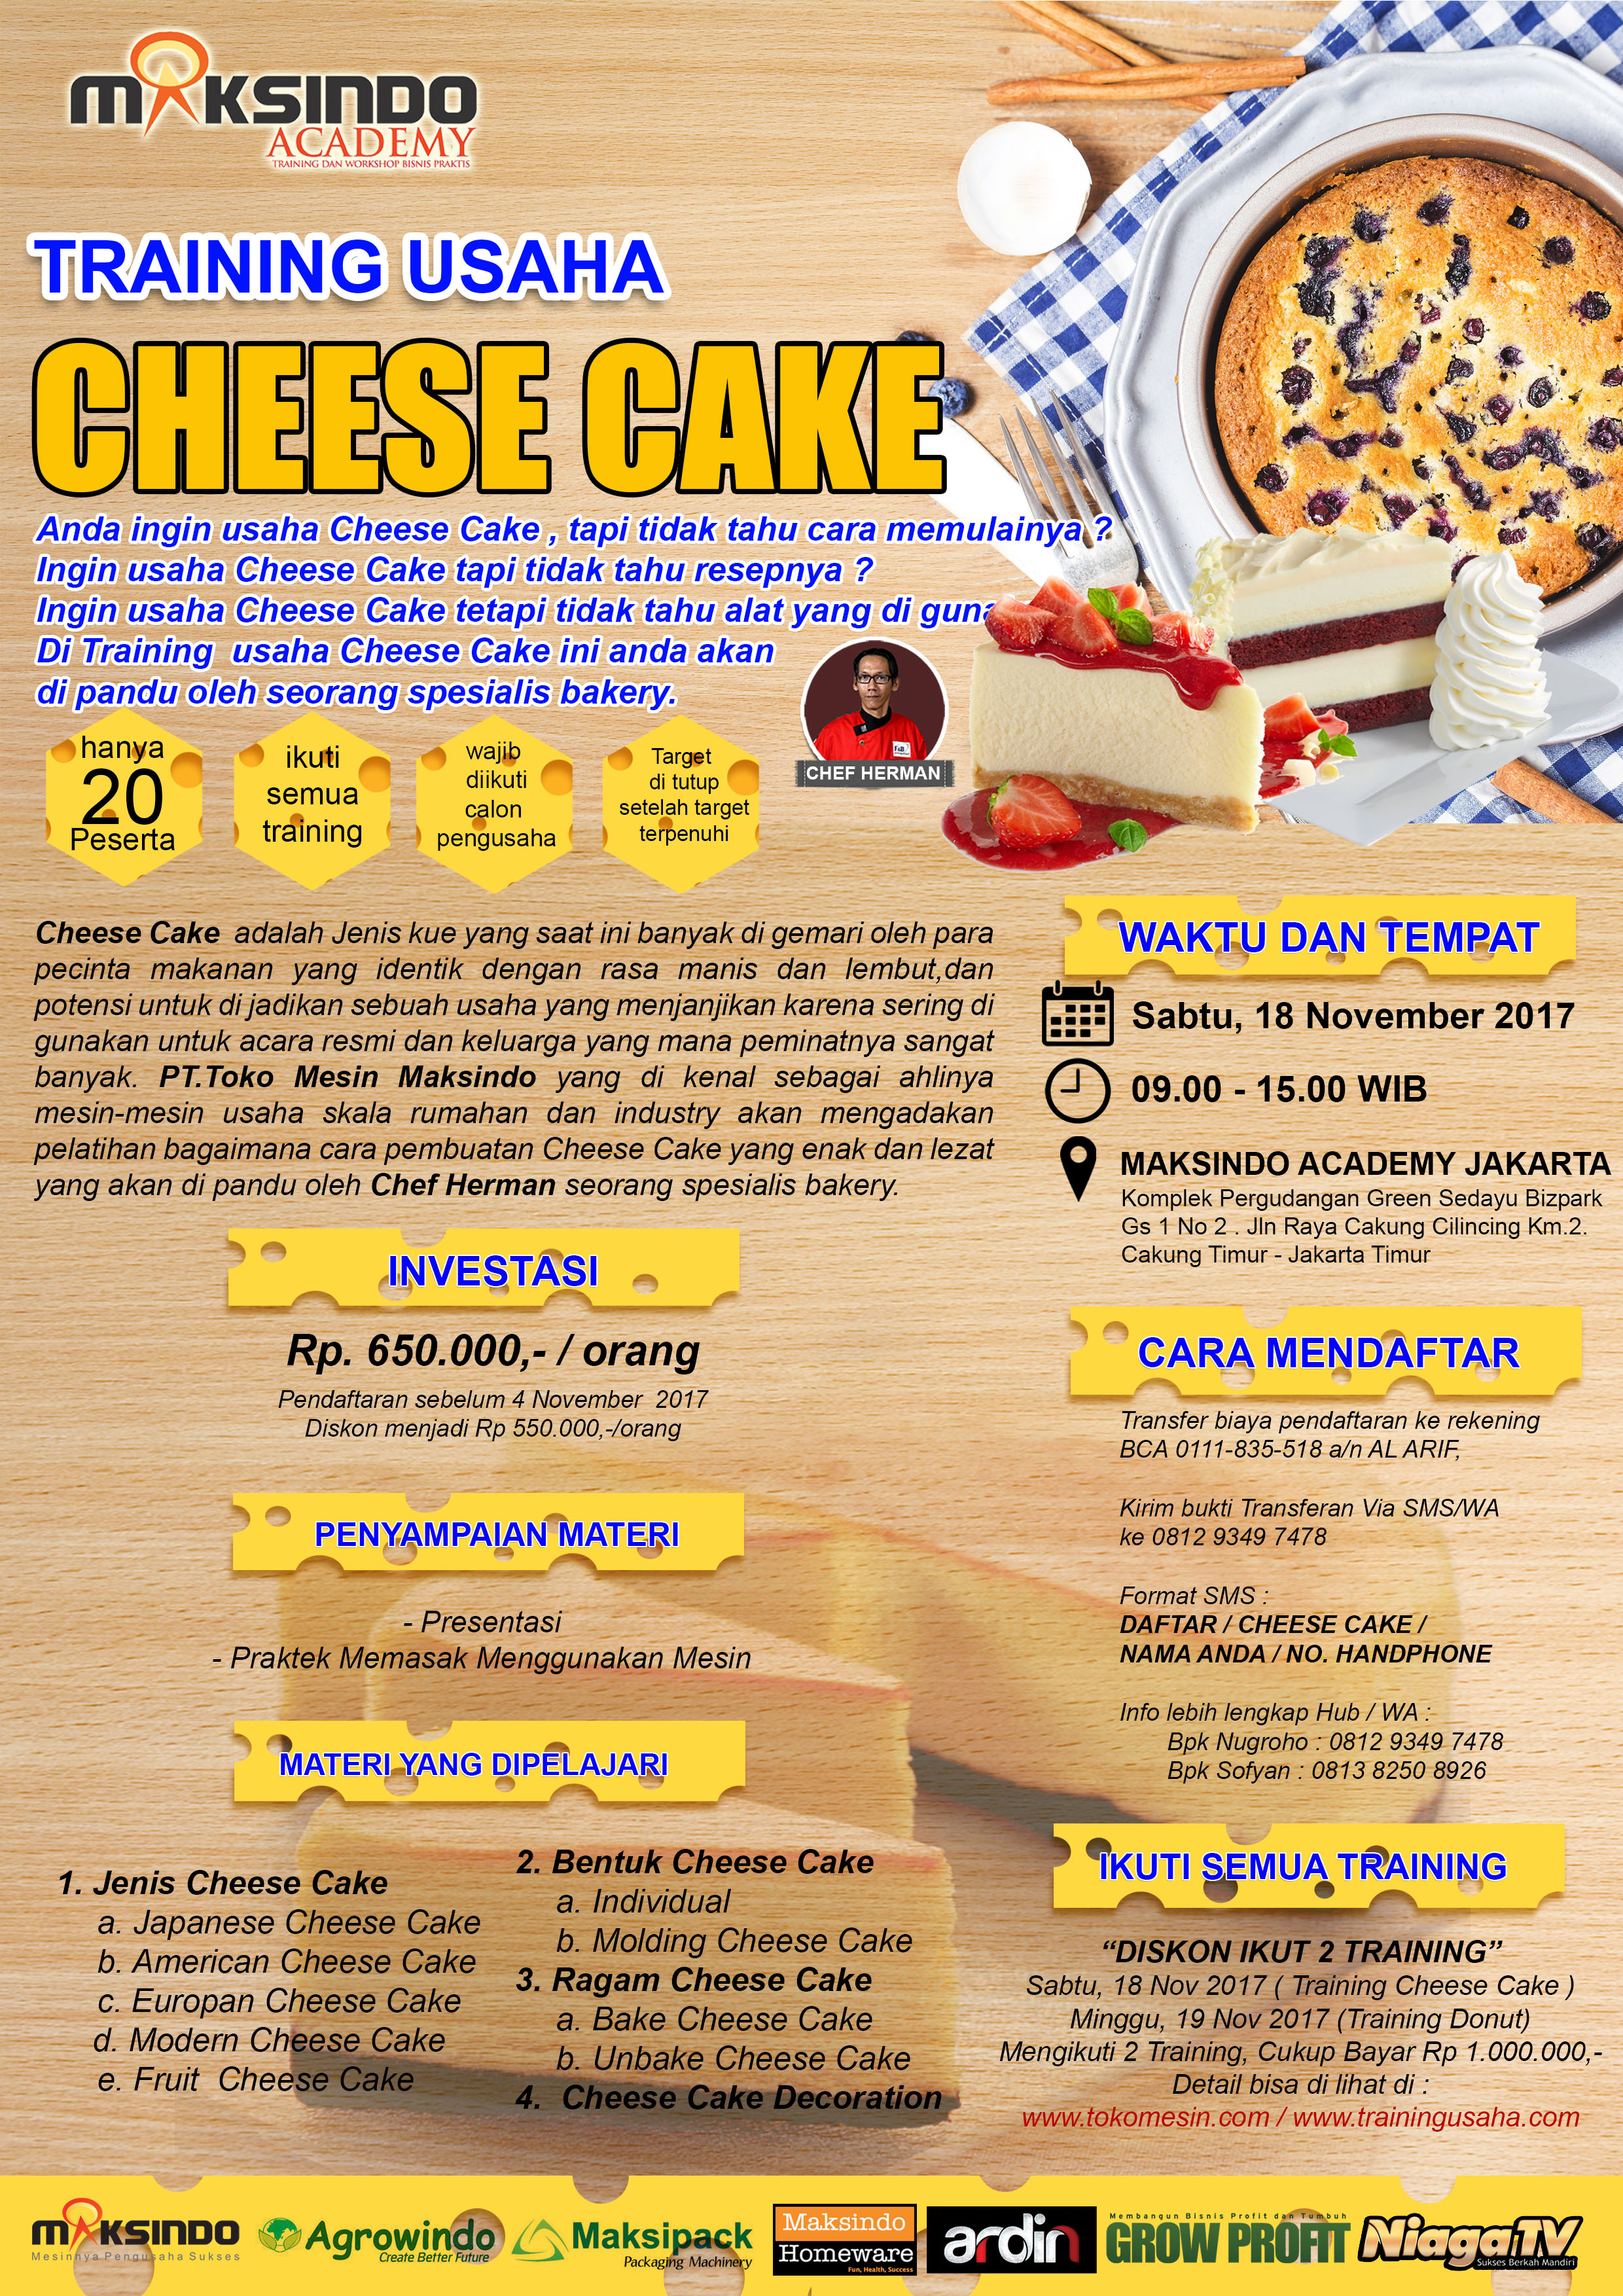 Training Usaha Cheese Cake, 18 November 2017